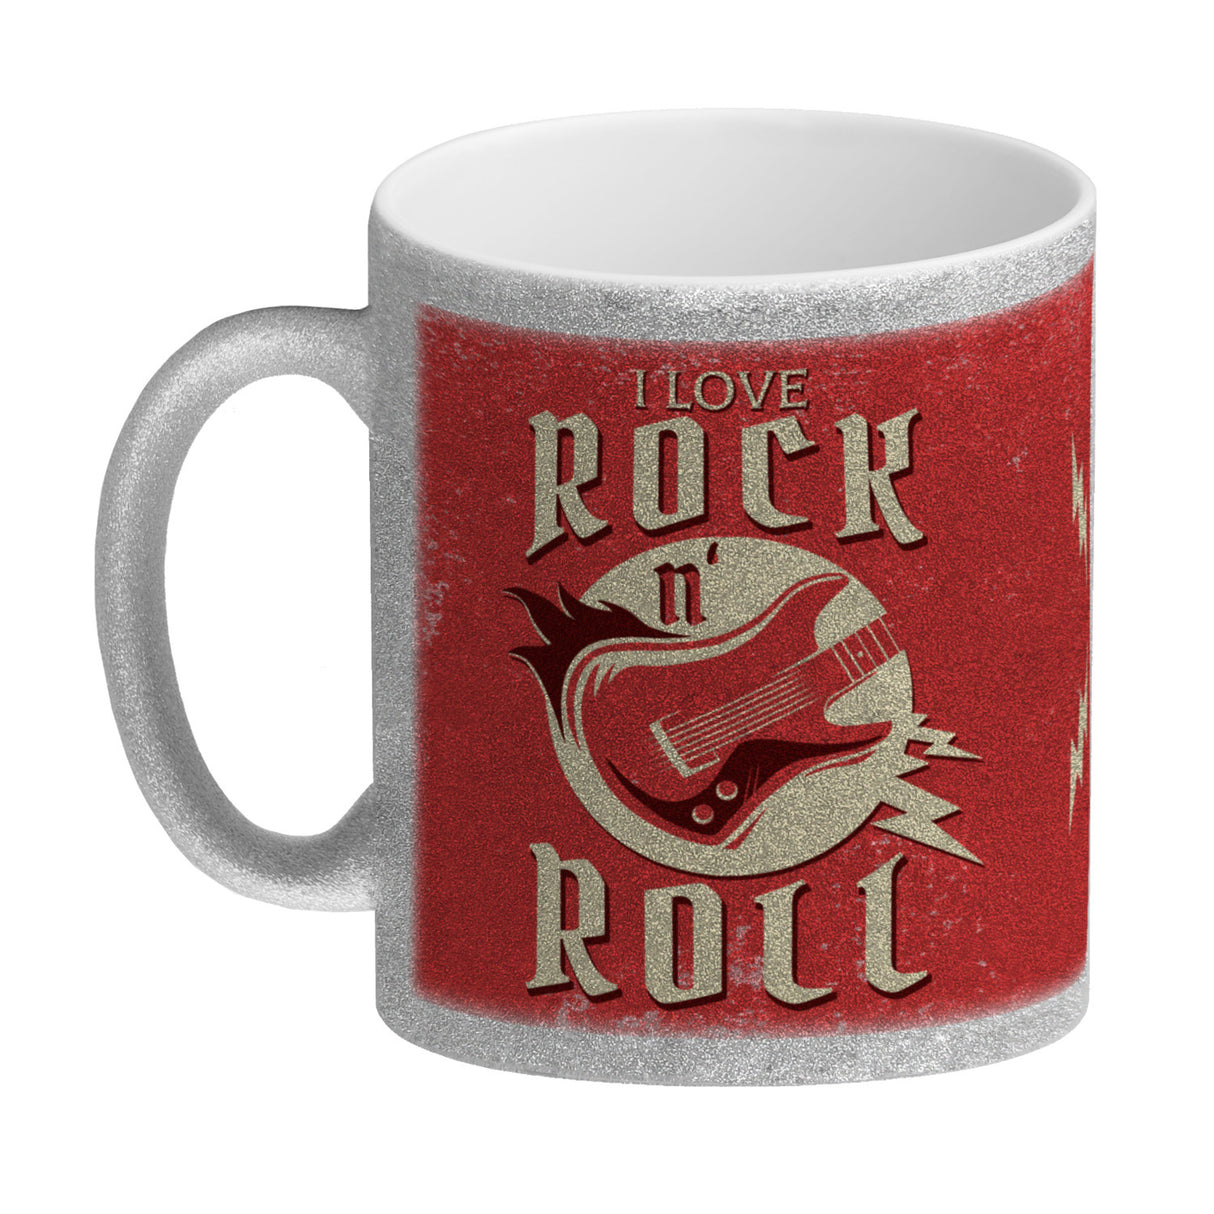 I Love Rock 'n' Roll Kaffeebecher mit Gitarren Motiv